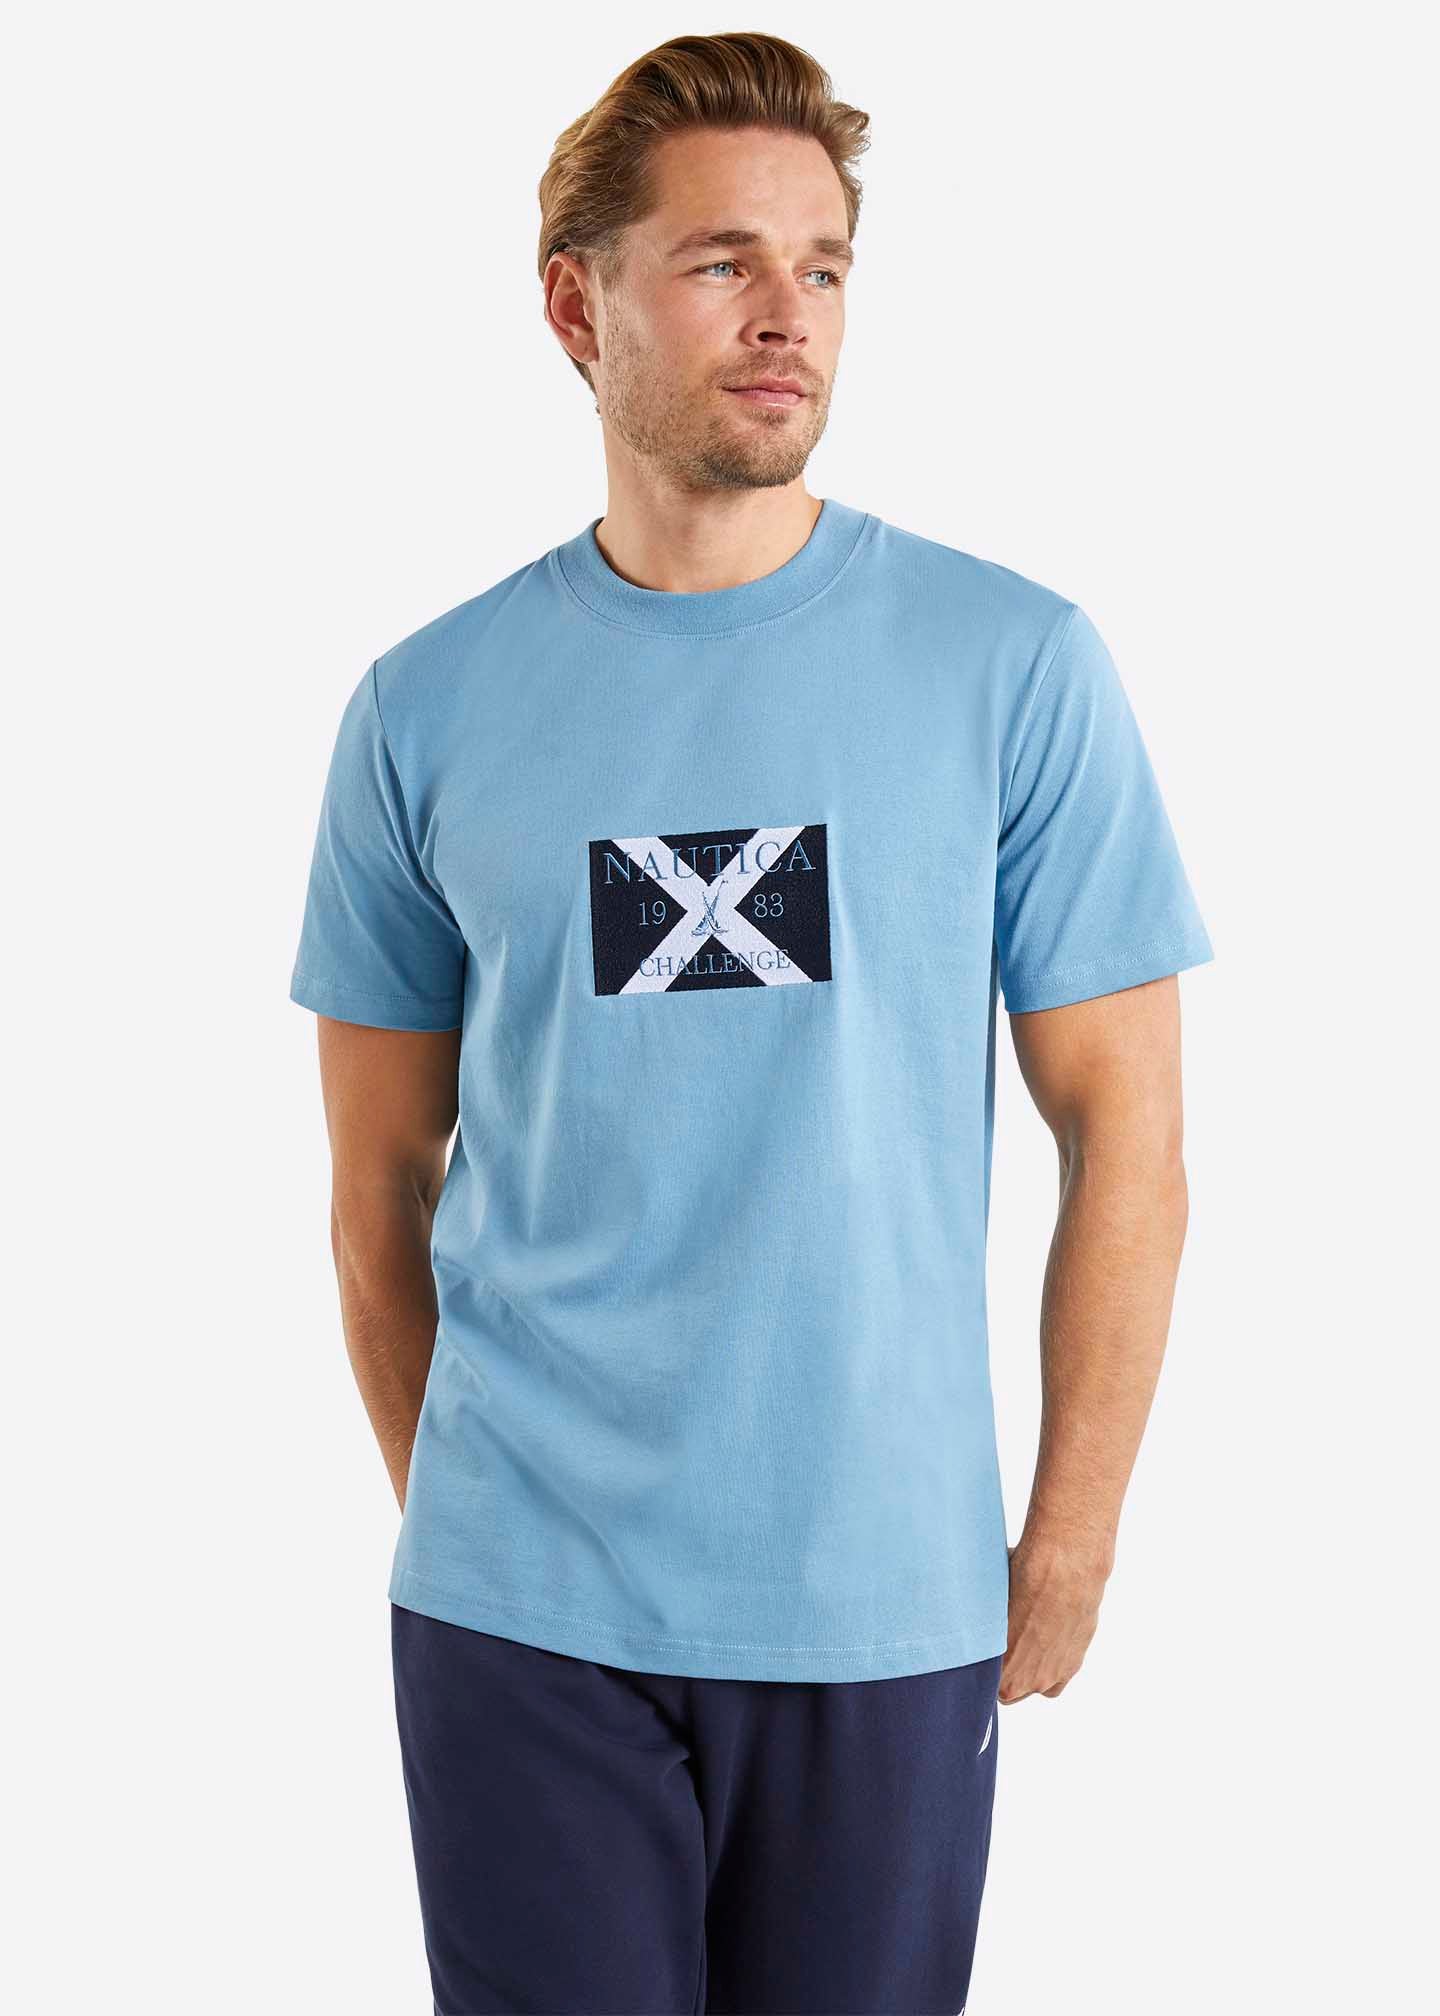 Columbus T-Shirt